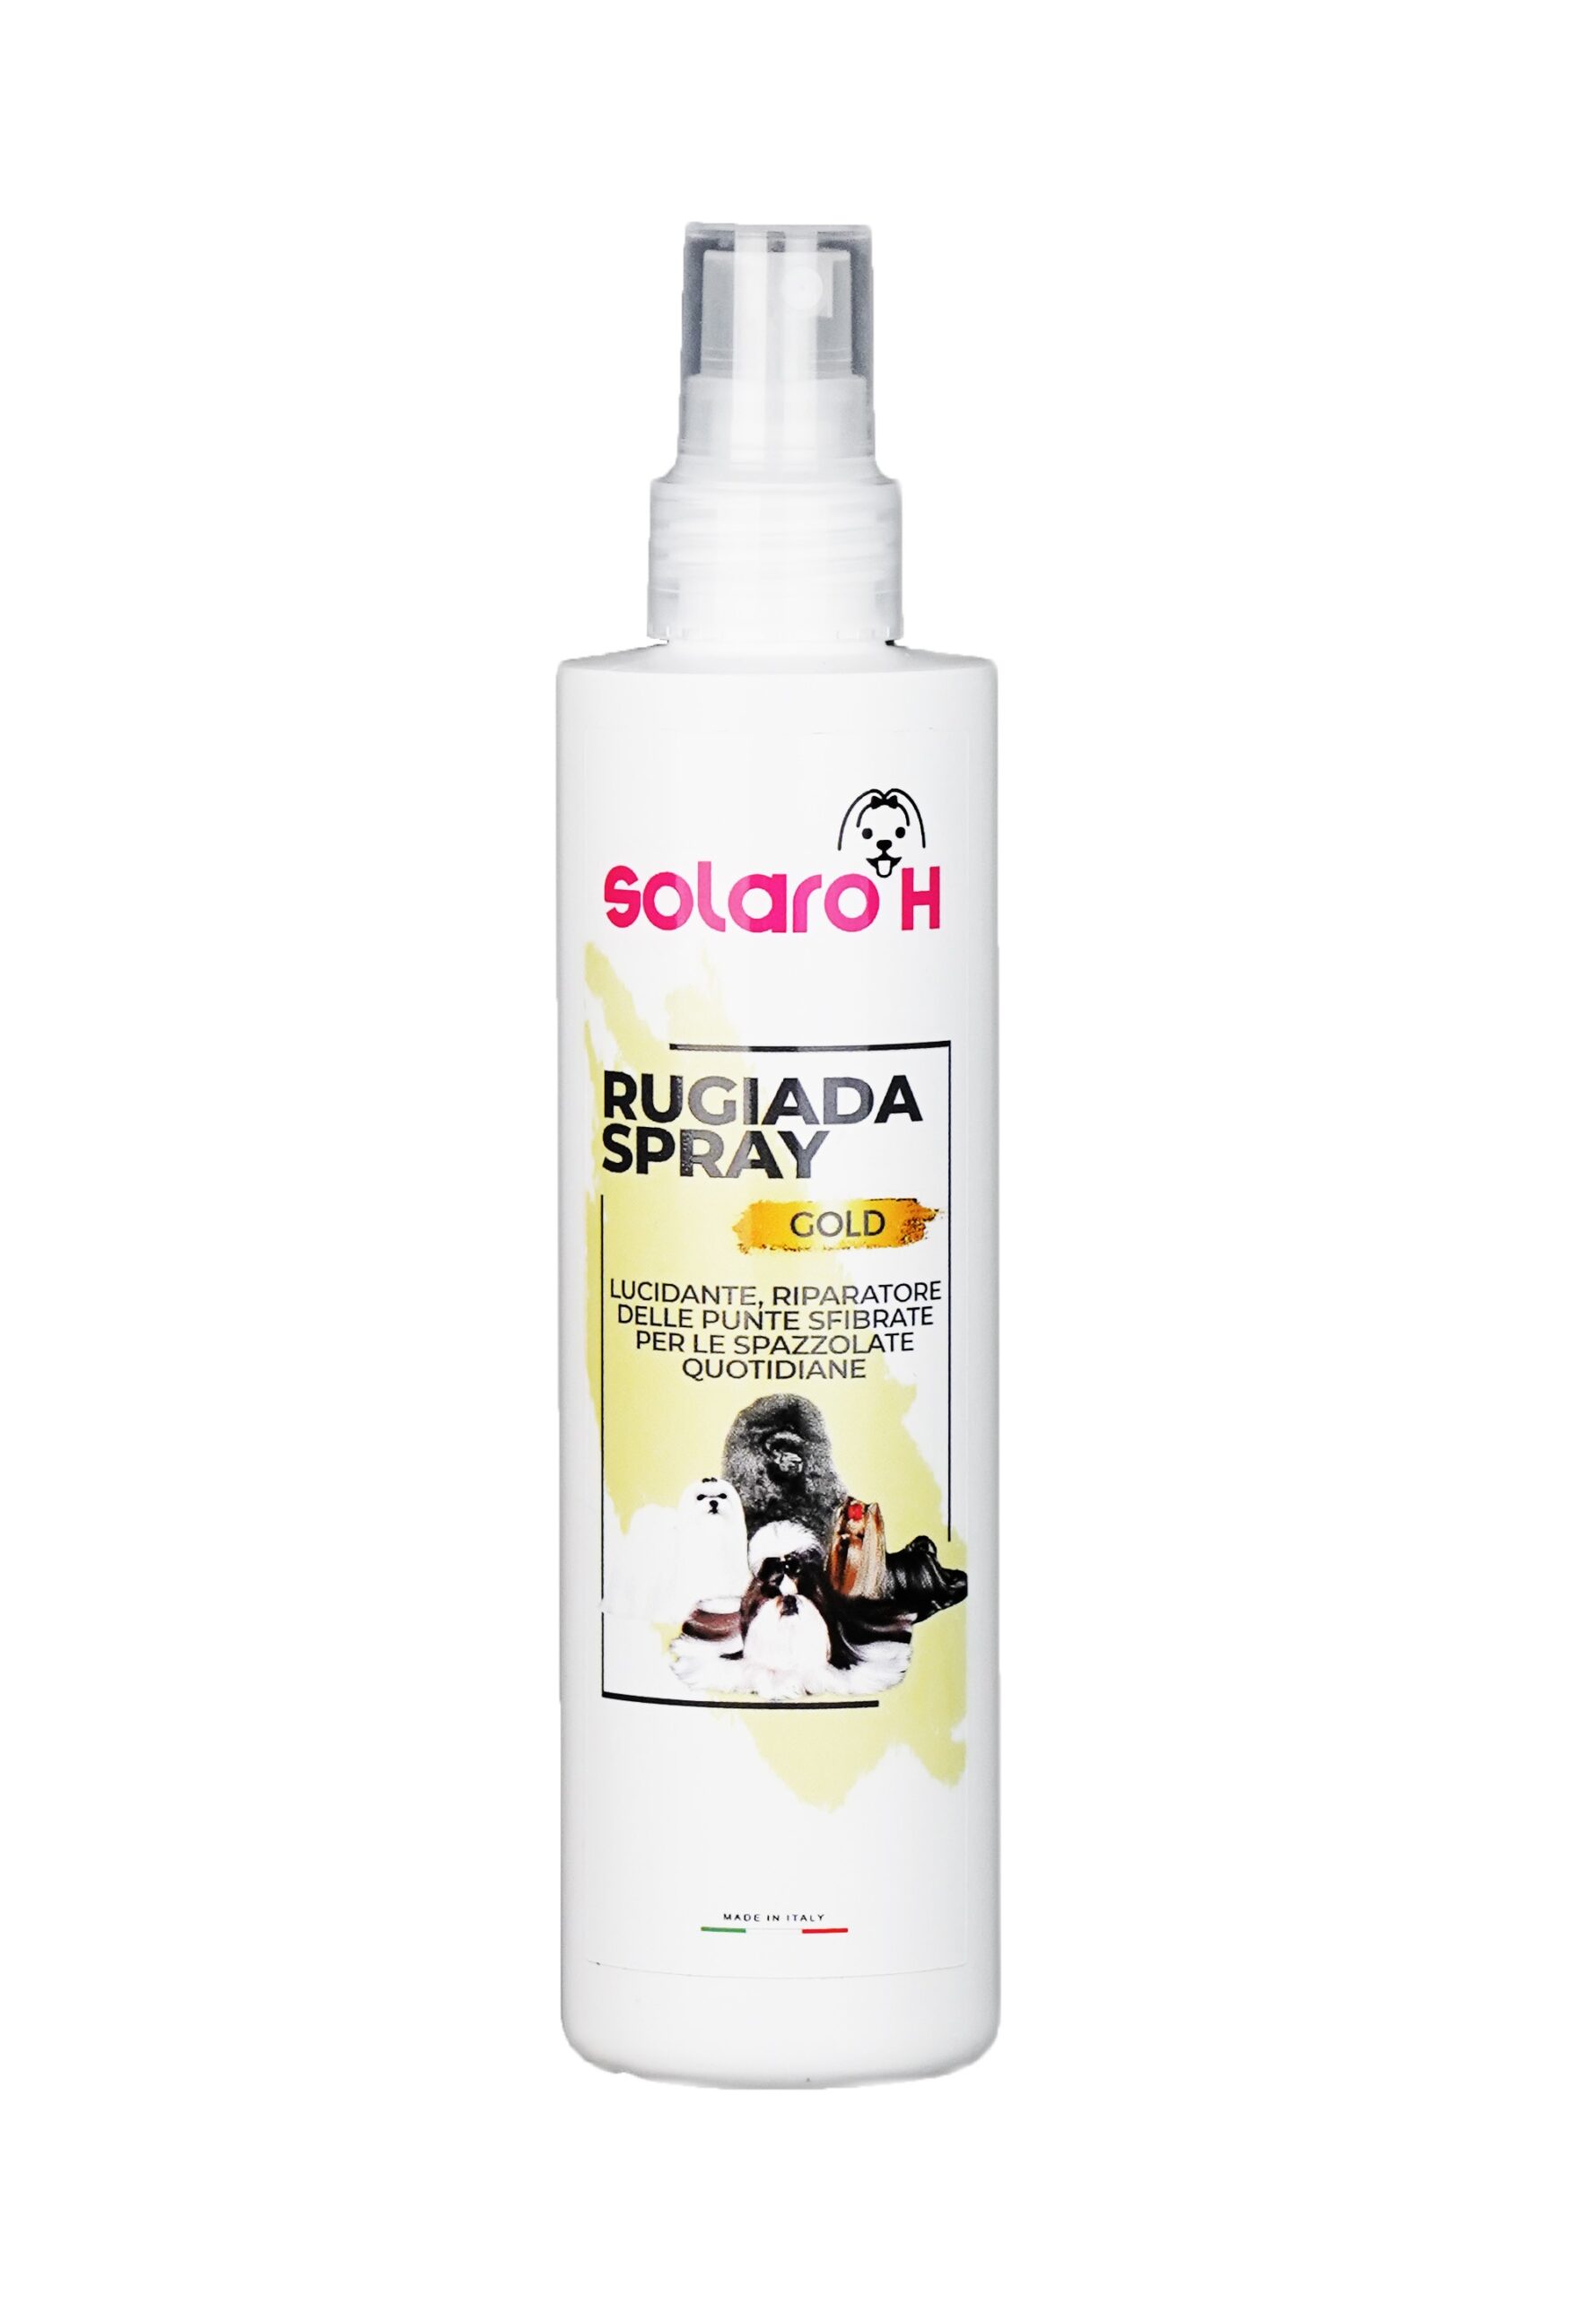 Solaro H Rugiada Spray Gold